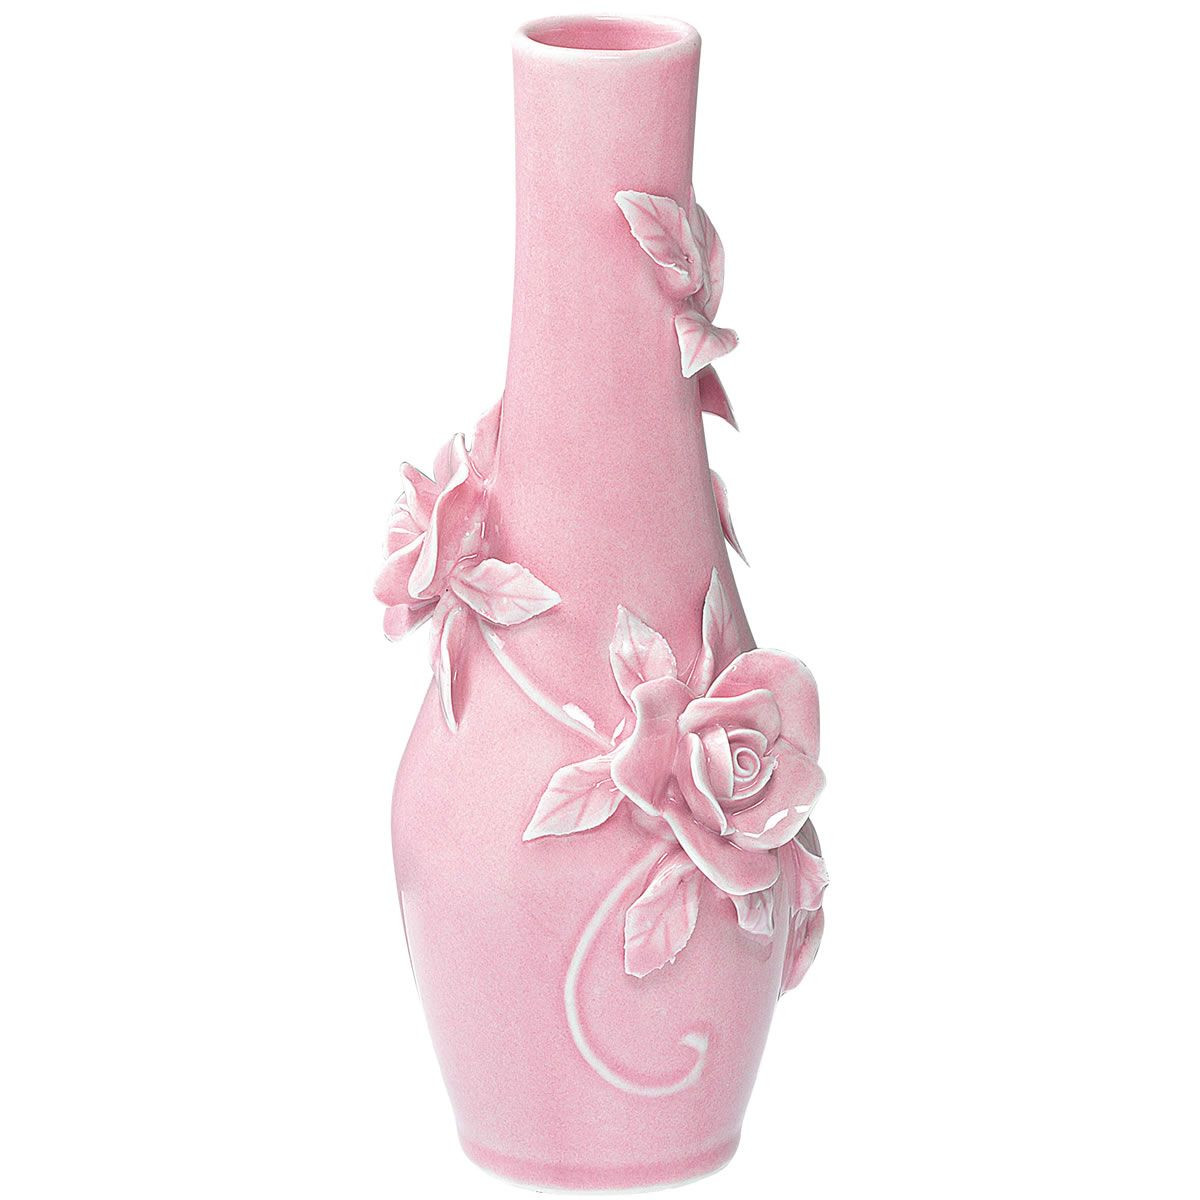 10 Wonderful Milk Jug Bud Vase 2023 free download milk jug bud vase of rambling rose bud vase pink from domayne pink pink pink throughout rambling rose bud vase pink from domayne